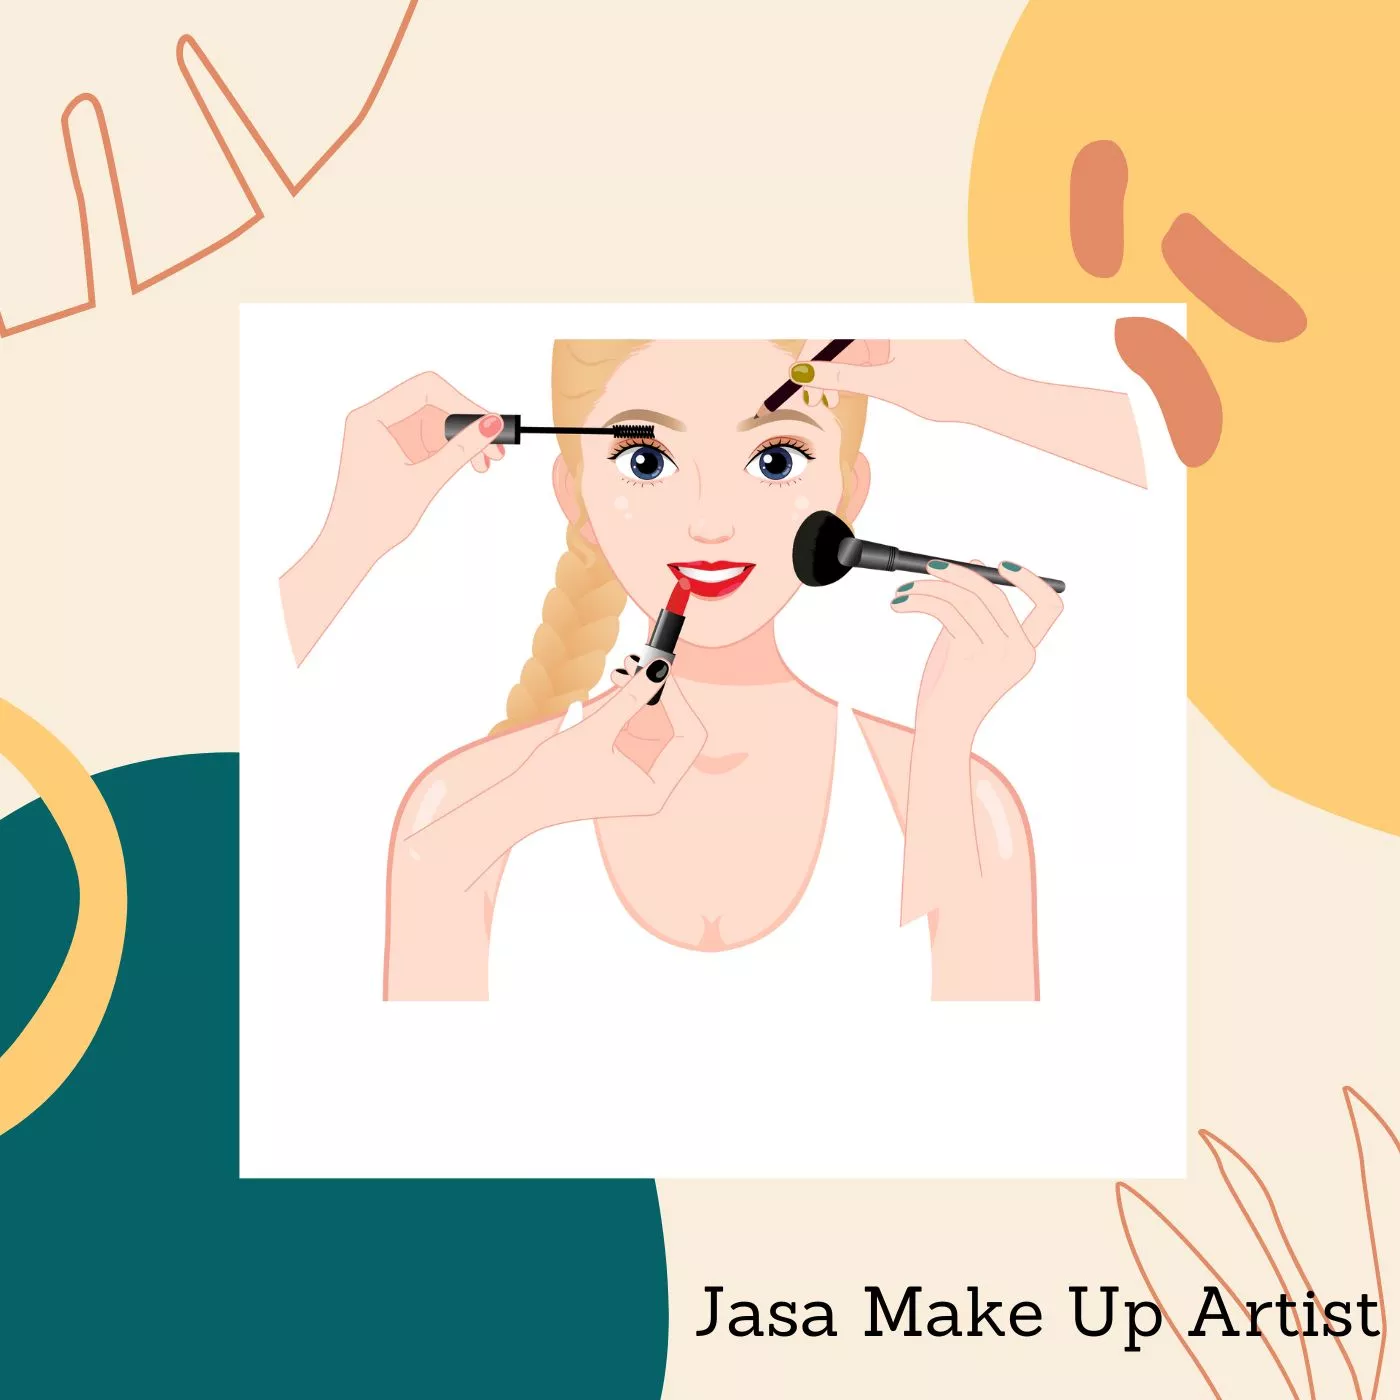 Jasa Make Up Artist 